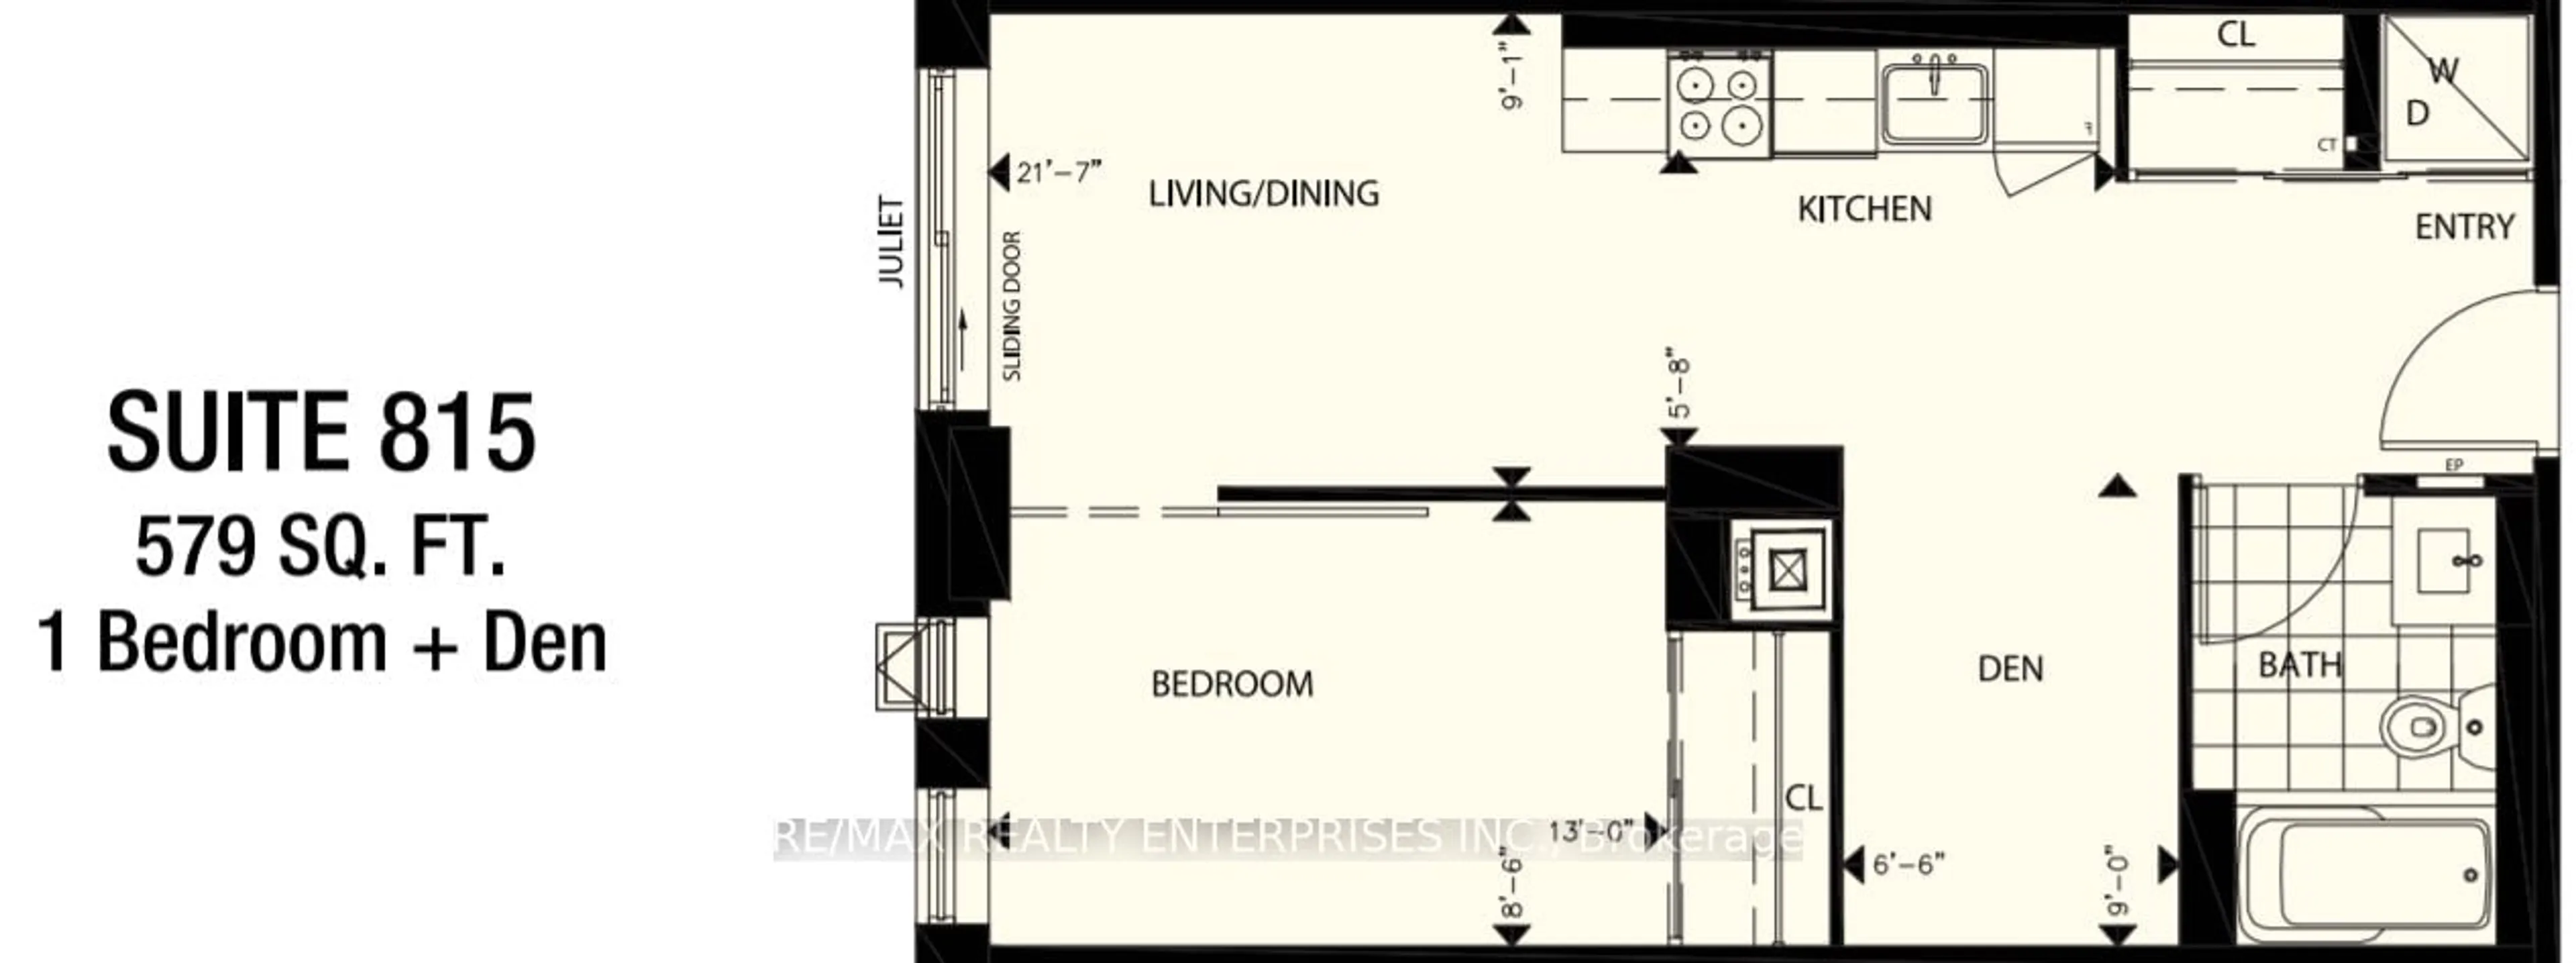 Floor plan for 297 College St #815, Toronto Ontario M5T 0C2